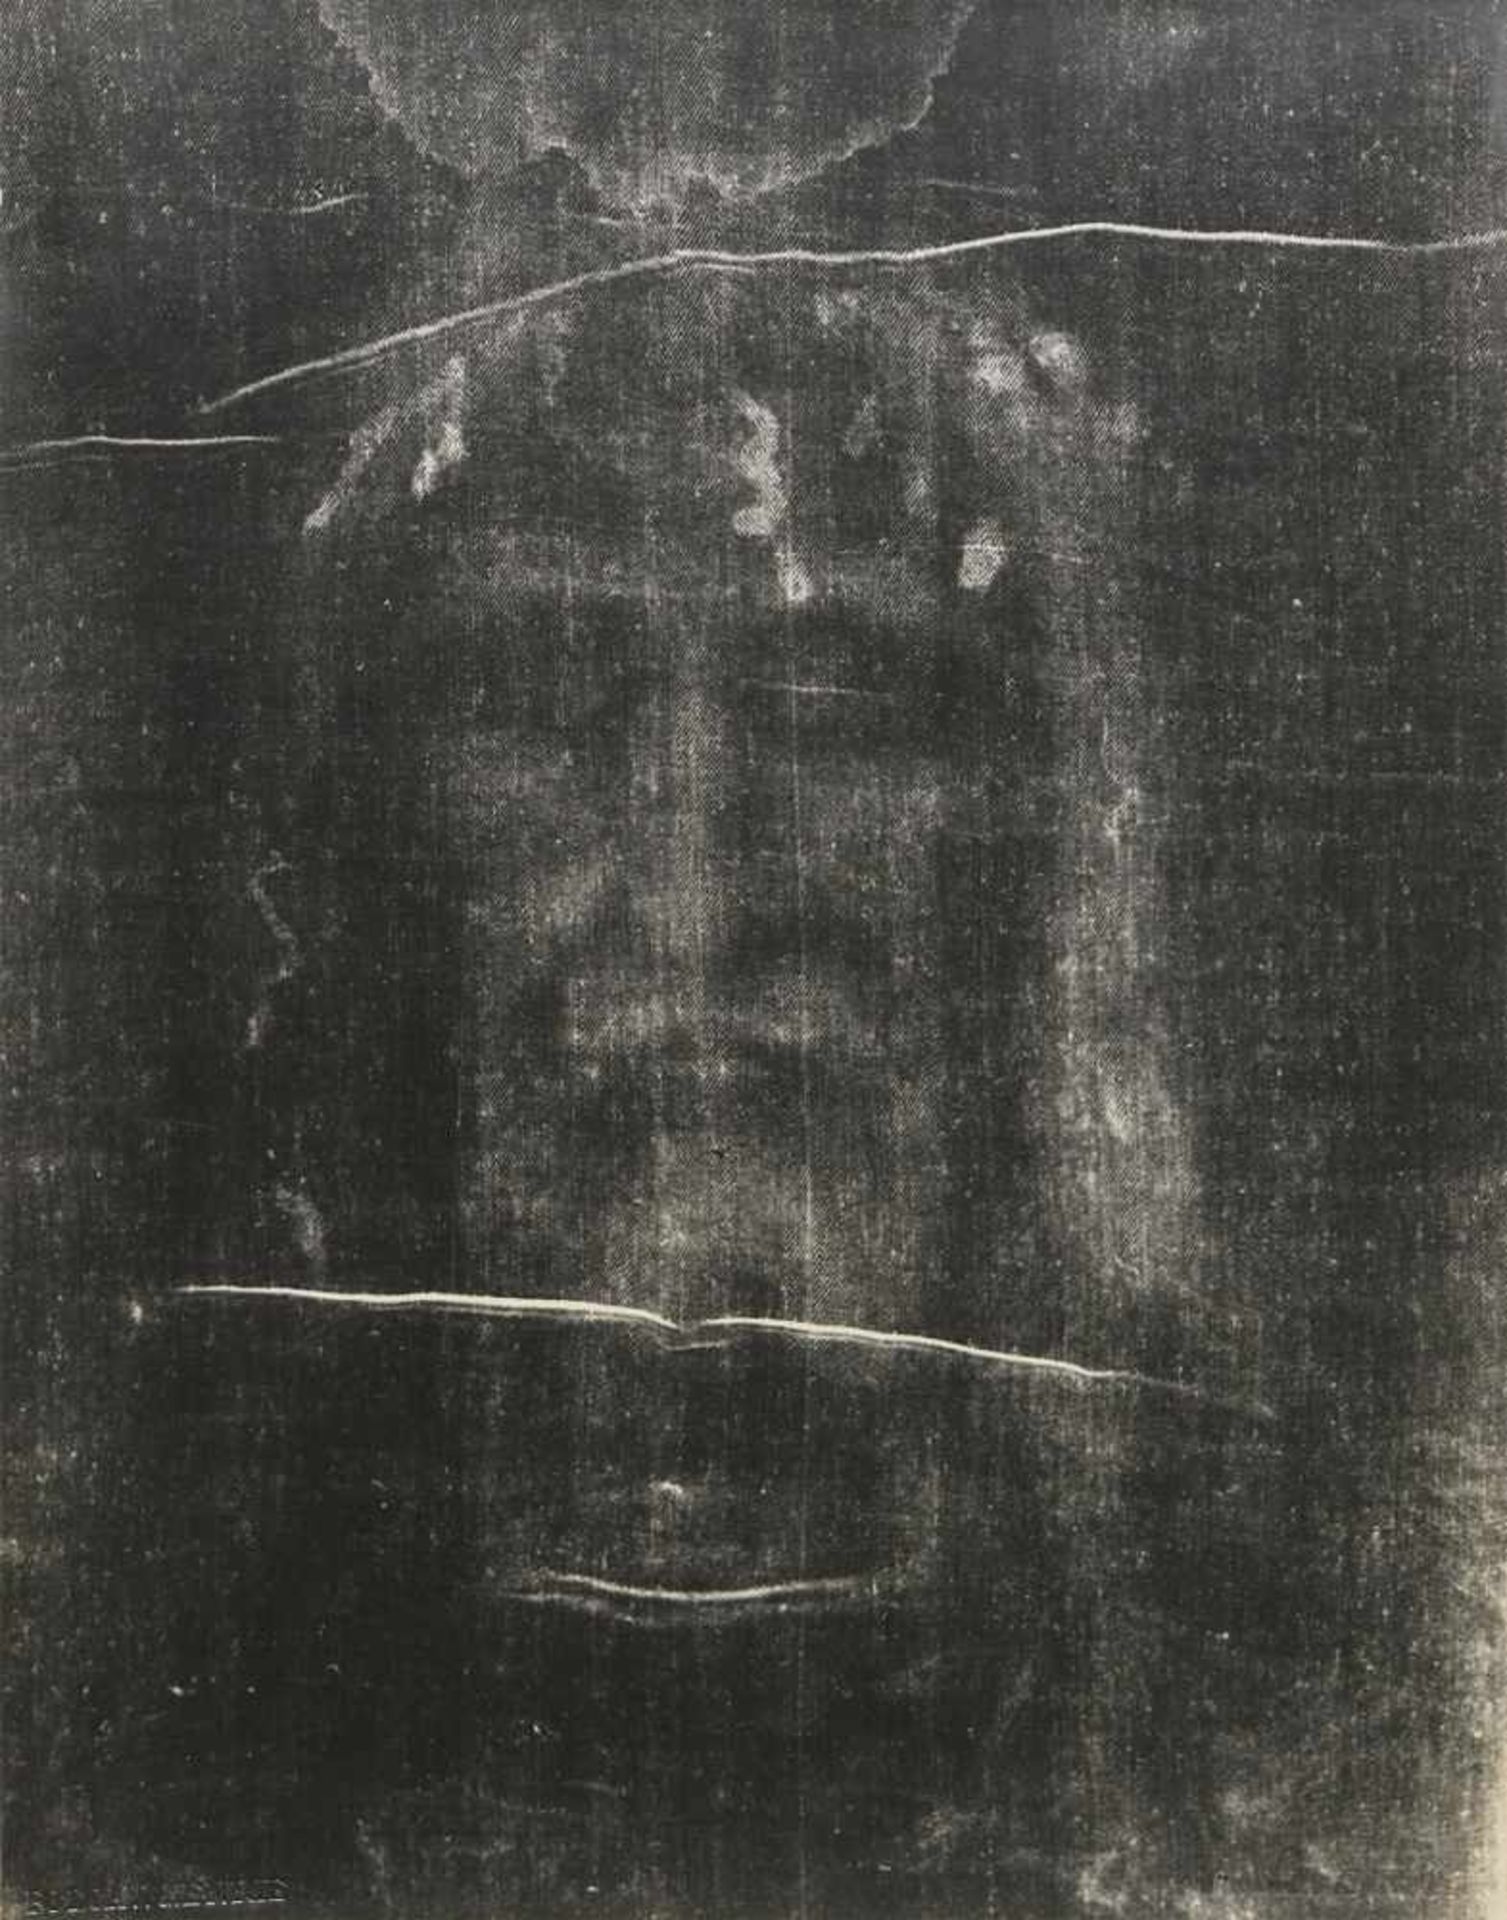 Enrie, Giuseppe: Santo volto del Divin Redentore (Detail of the Shroud of Turin) "Santo volto del